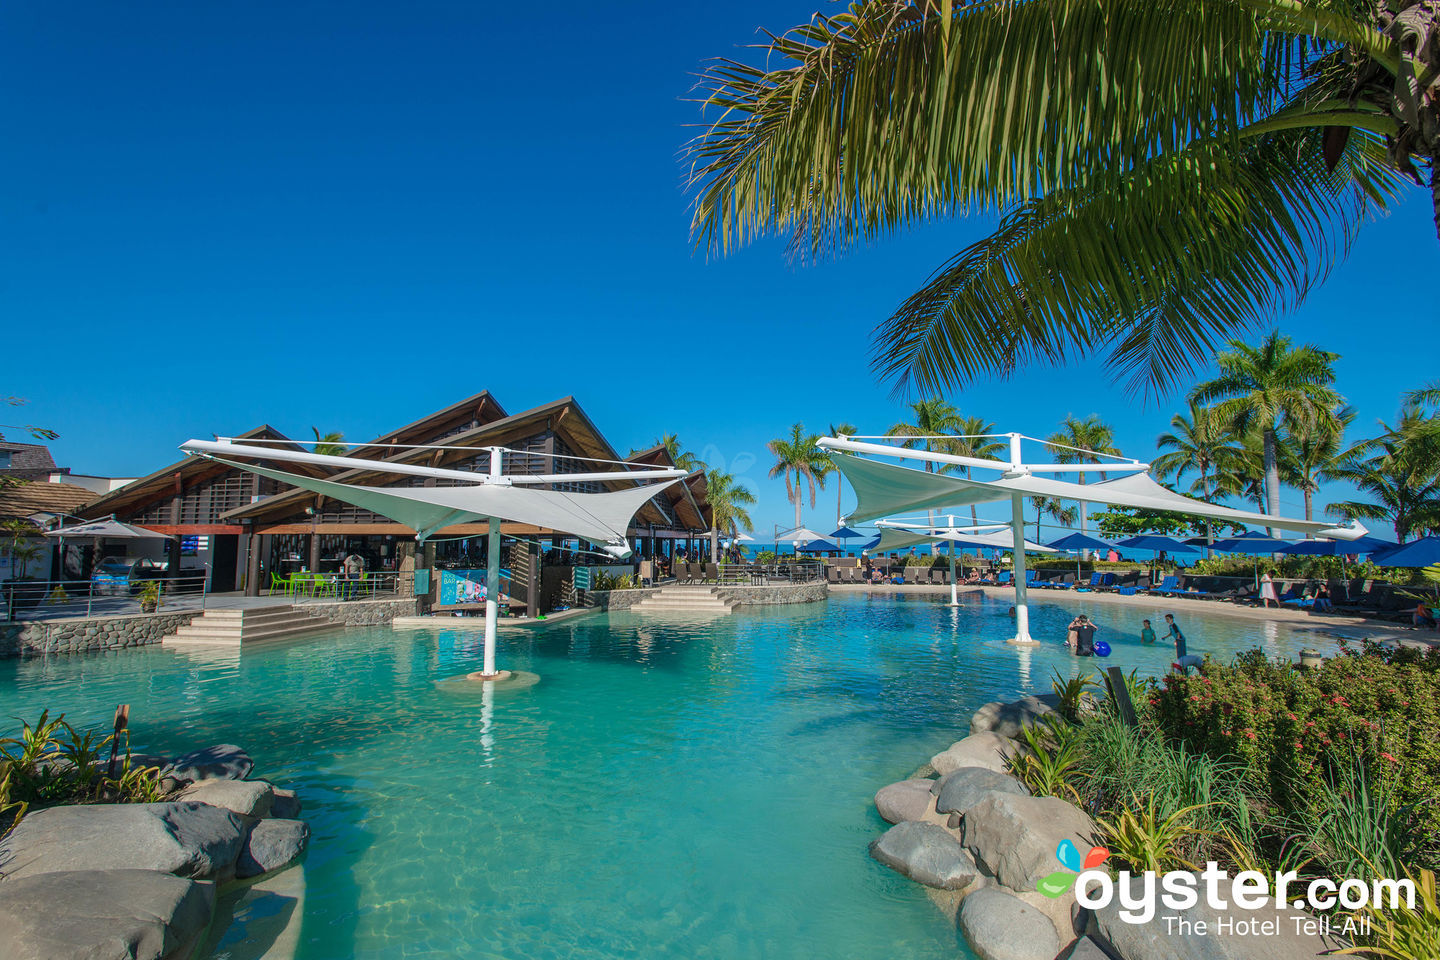 Radisson Blu Resort Fiji Denarau Island - wide 4